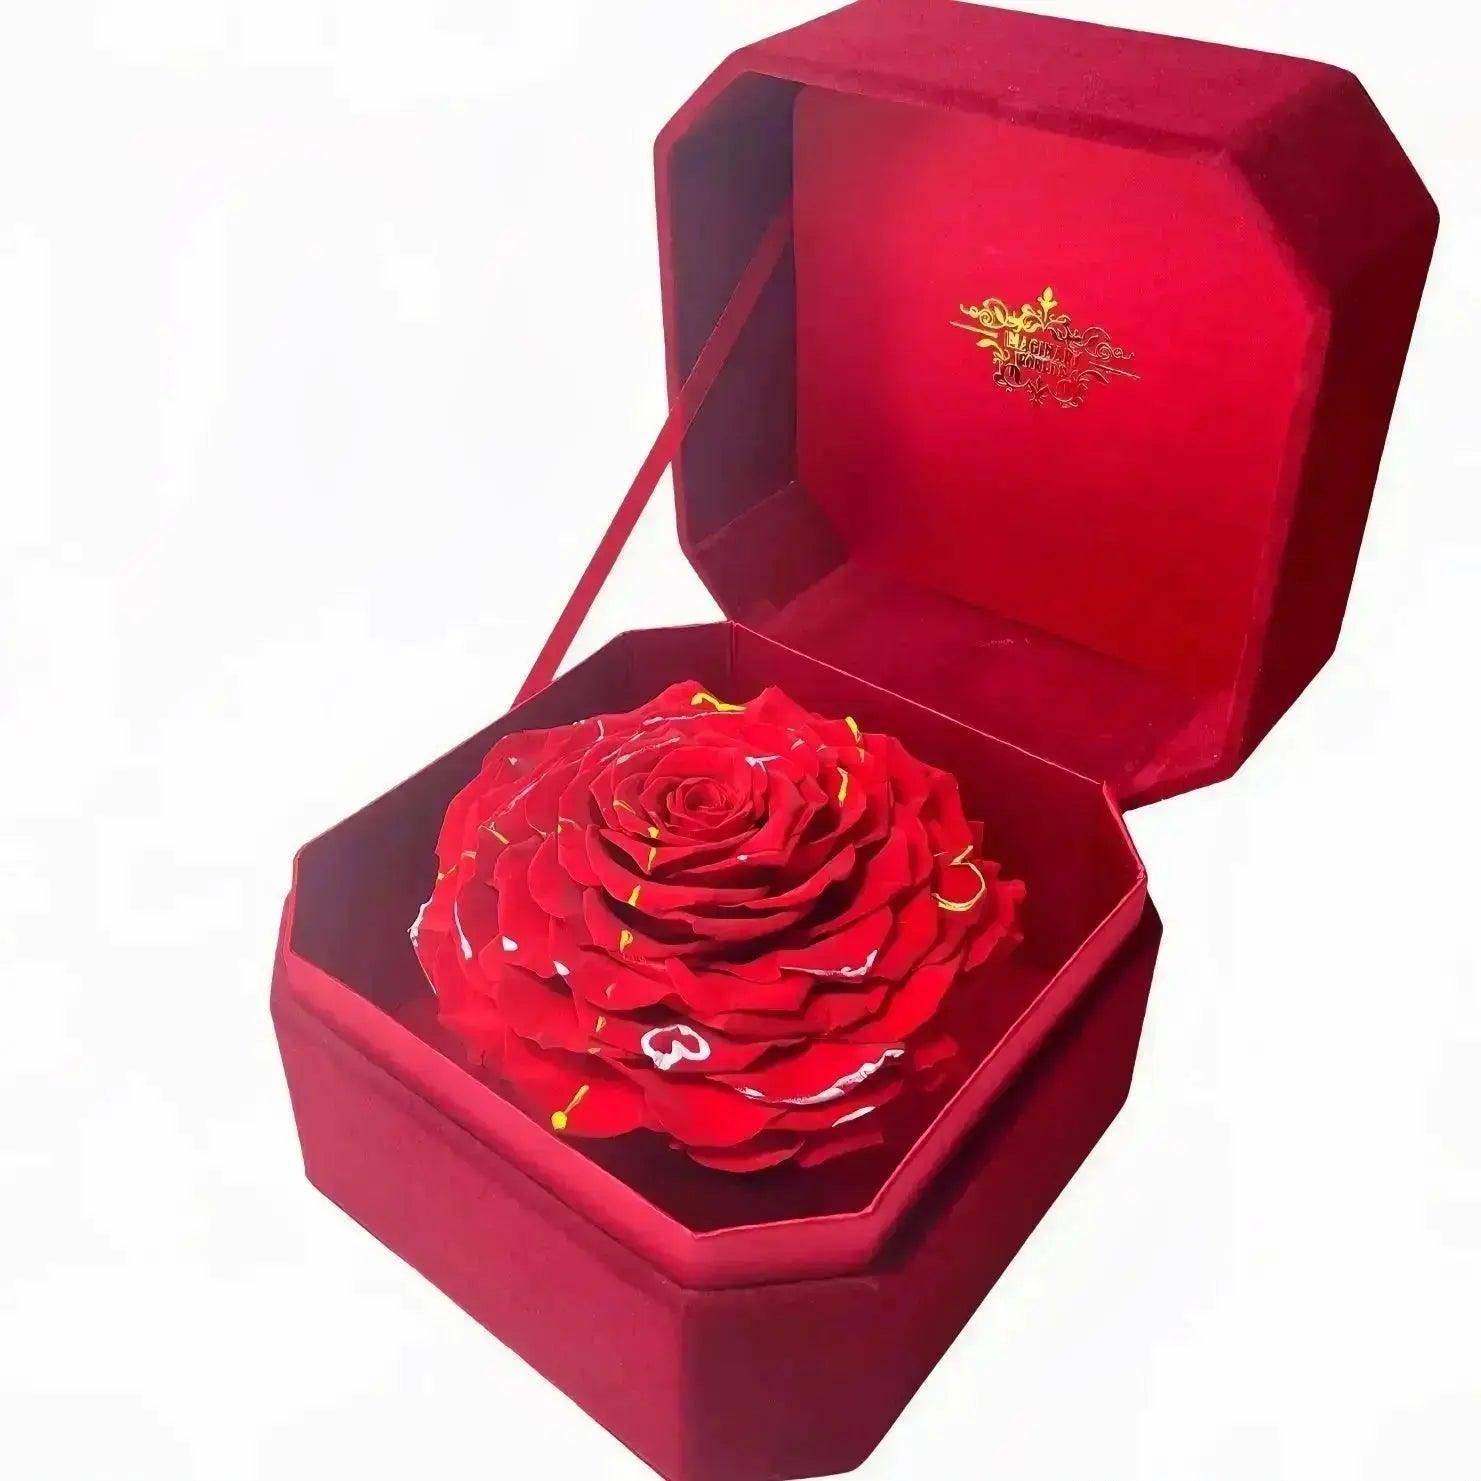 Single Rose Elegance: Luxurious Red Velvet Box Edition - Imaginary Worlds